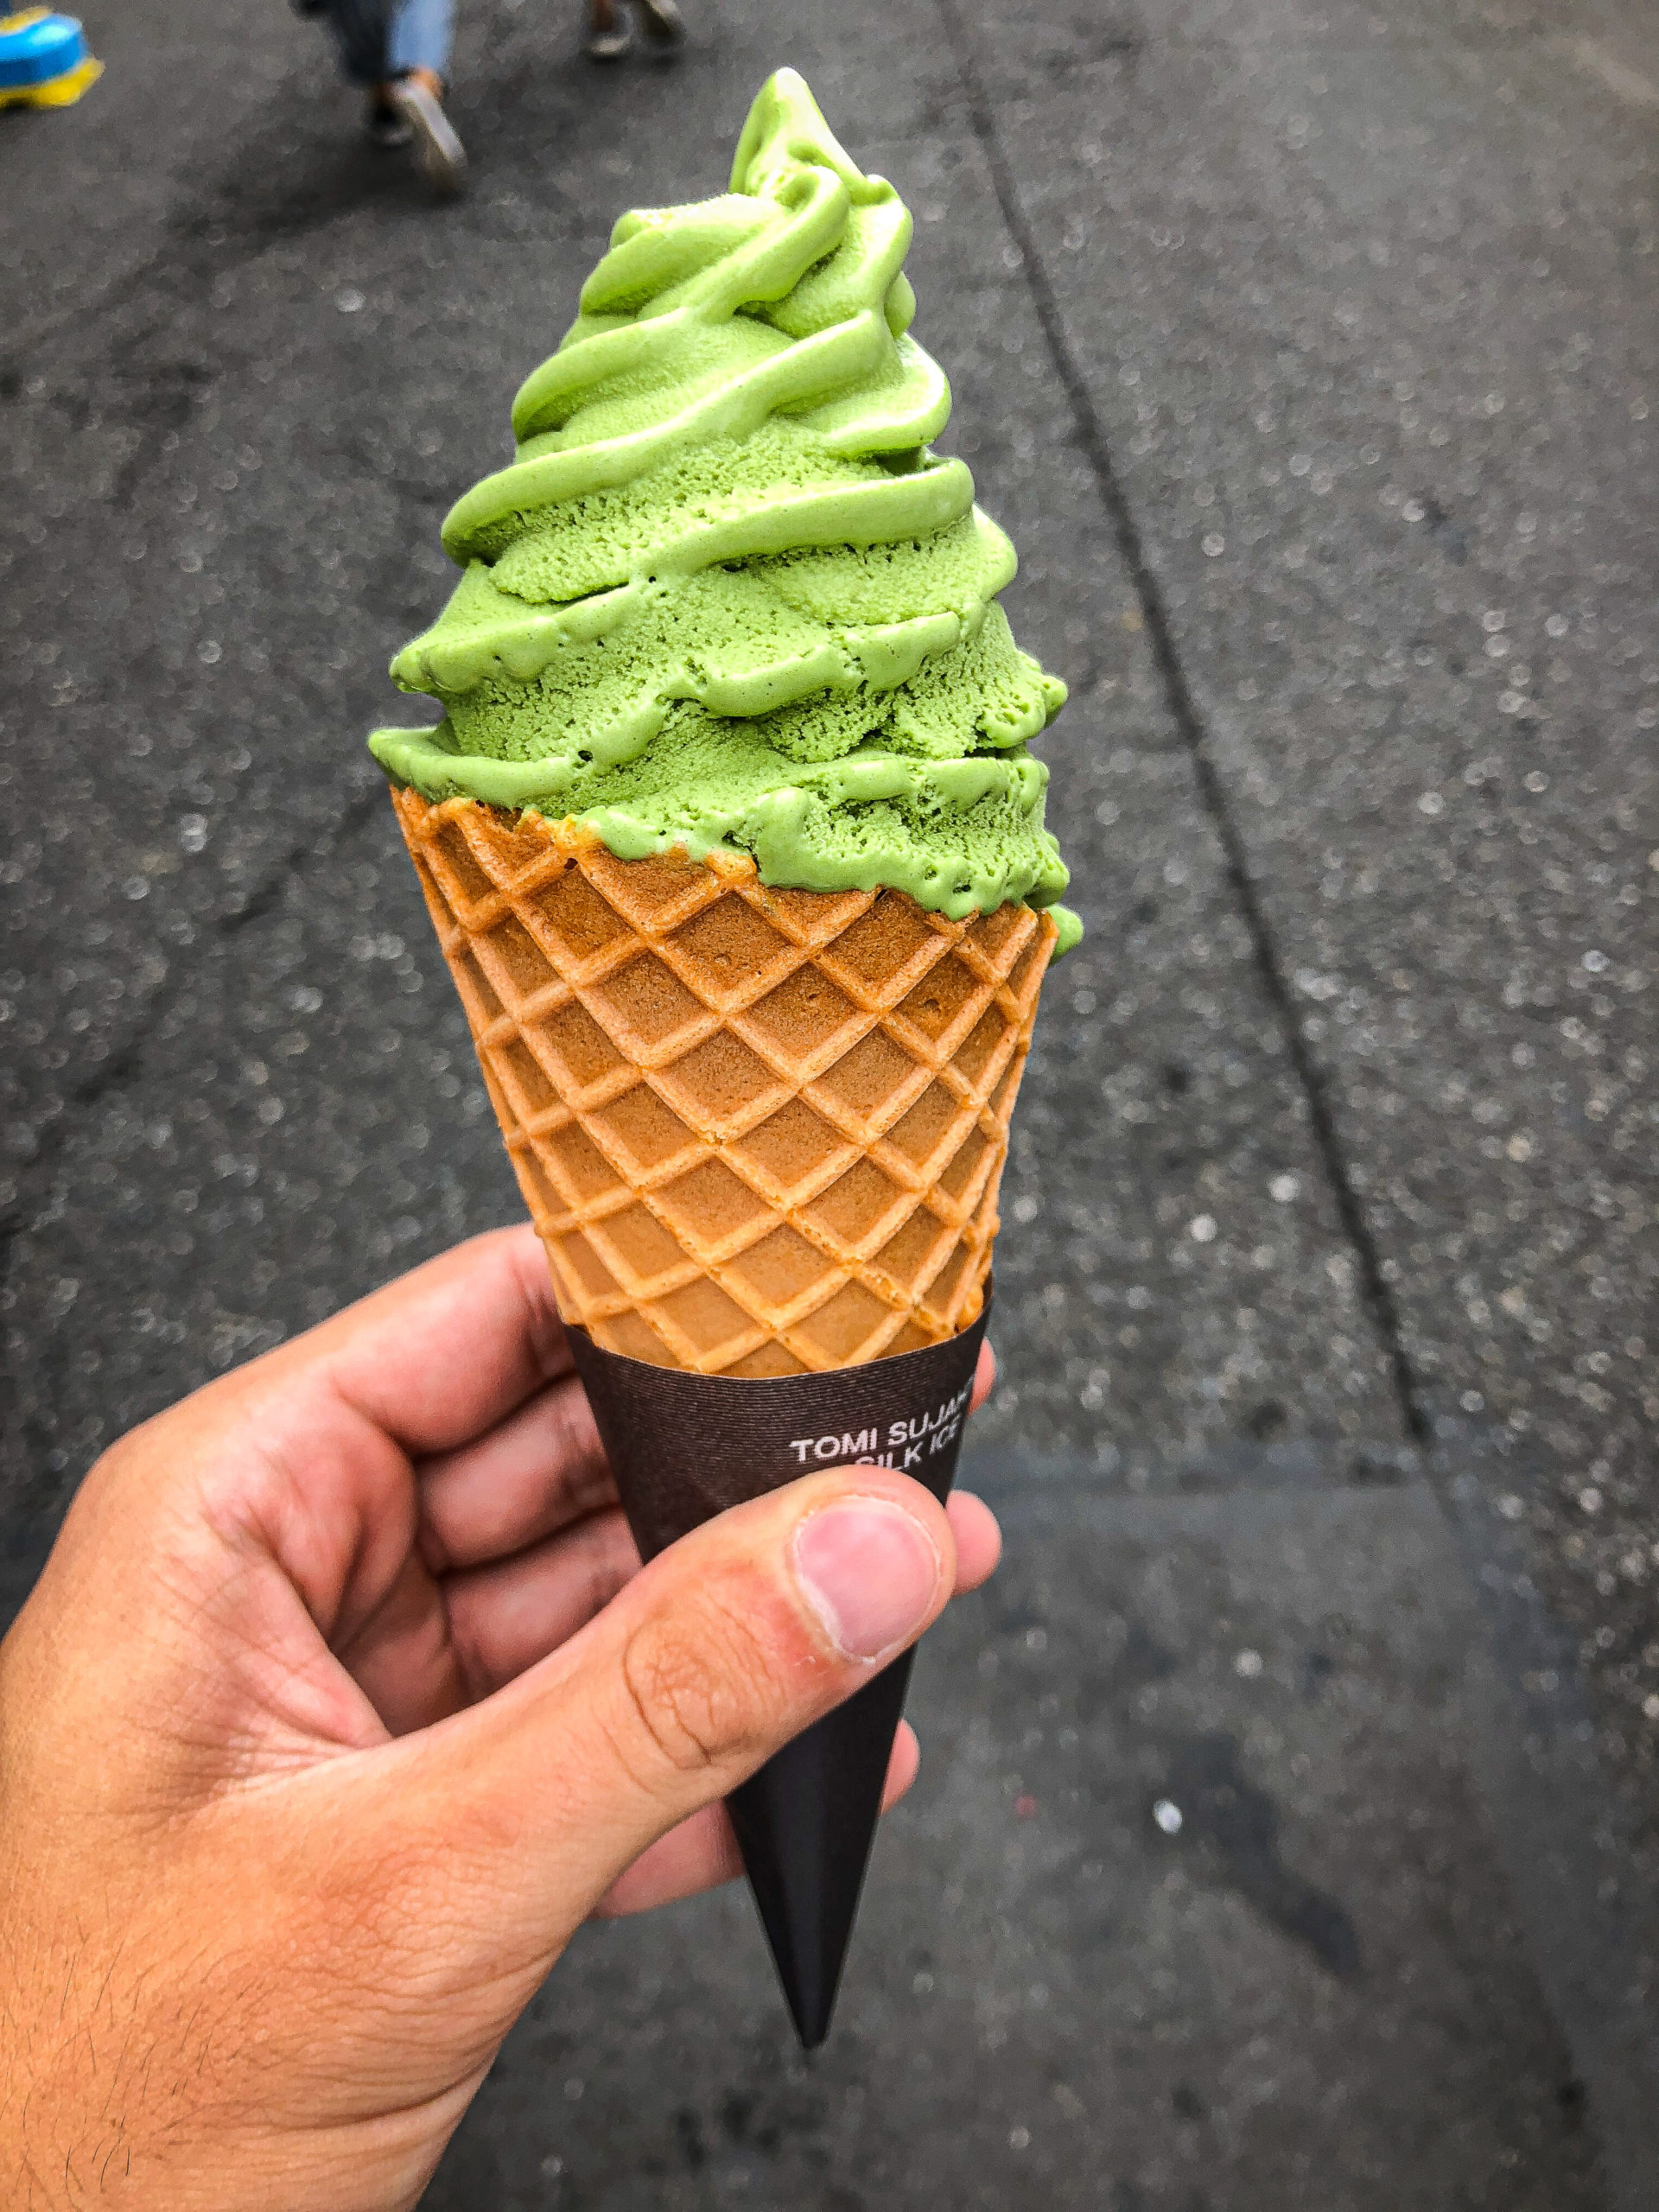 Match Ice cream in Japan